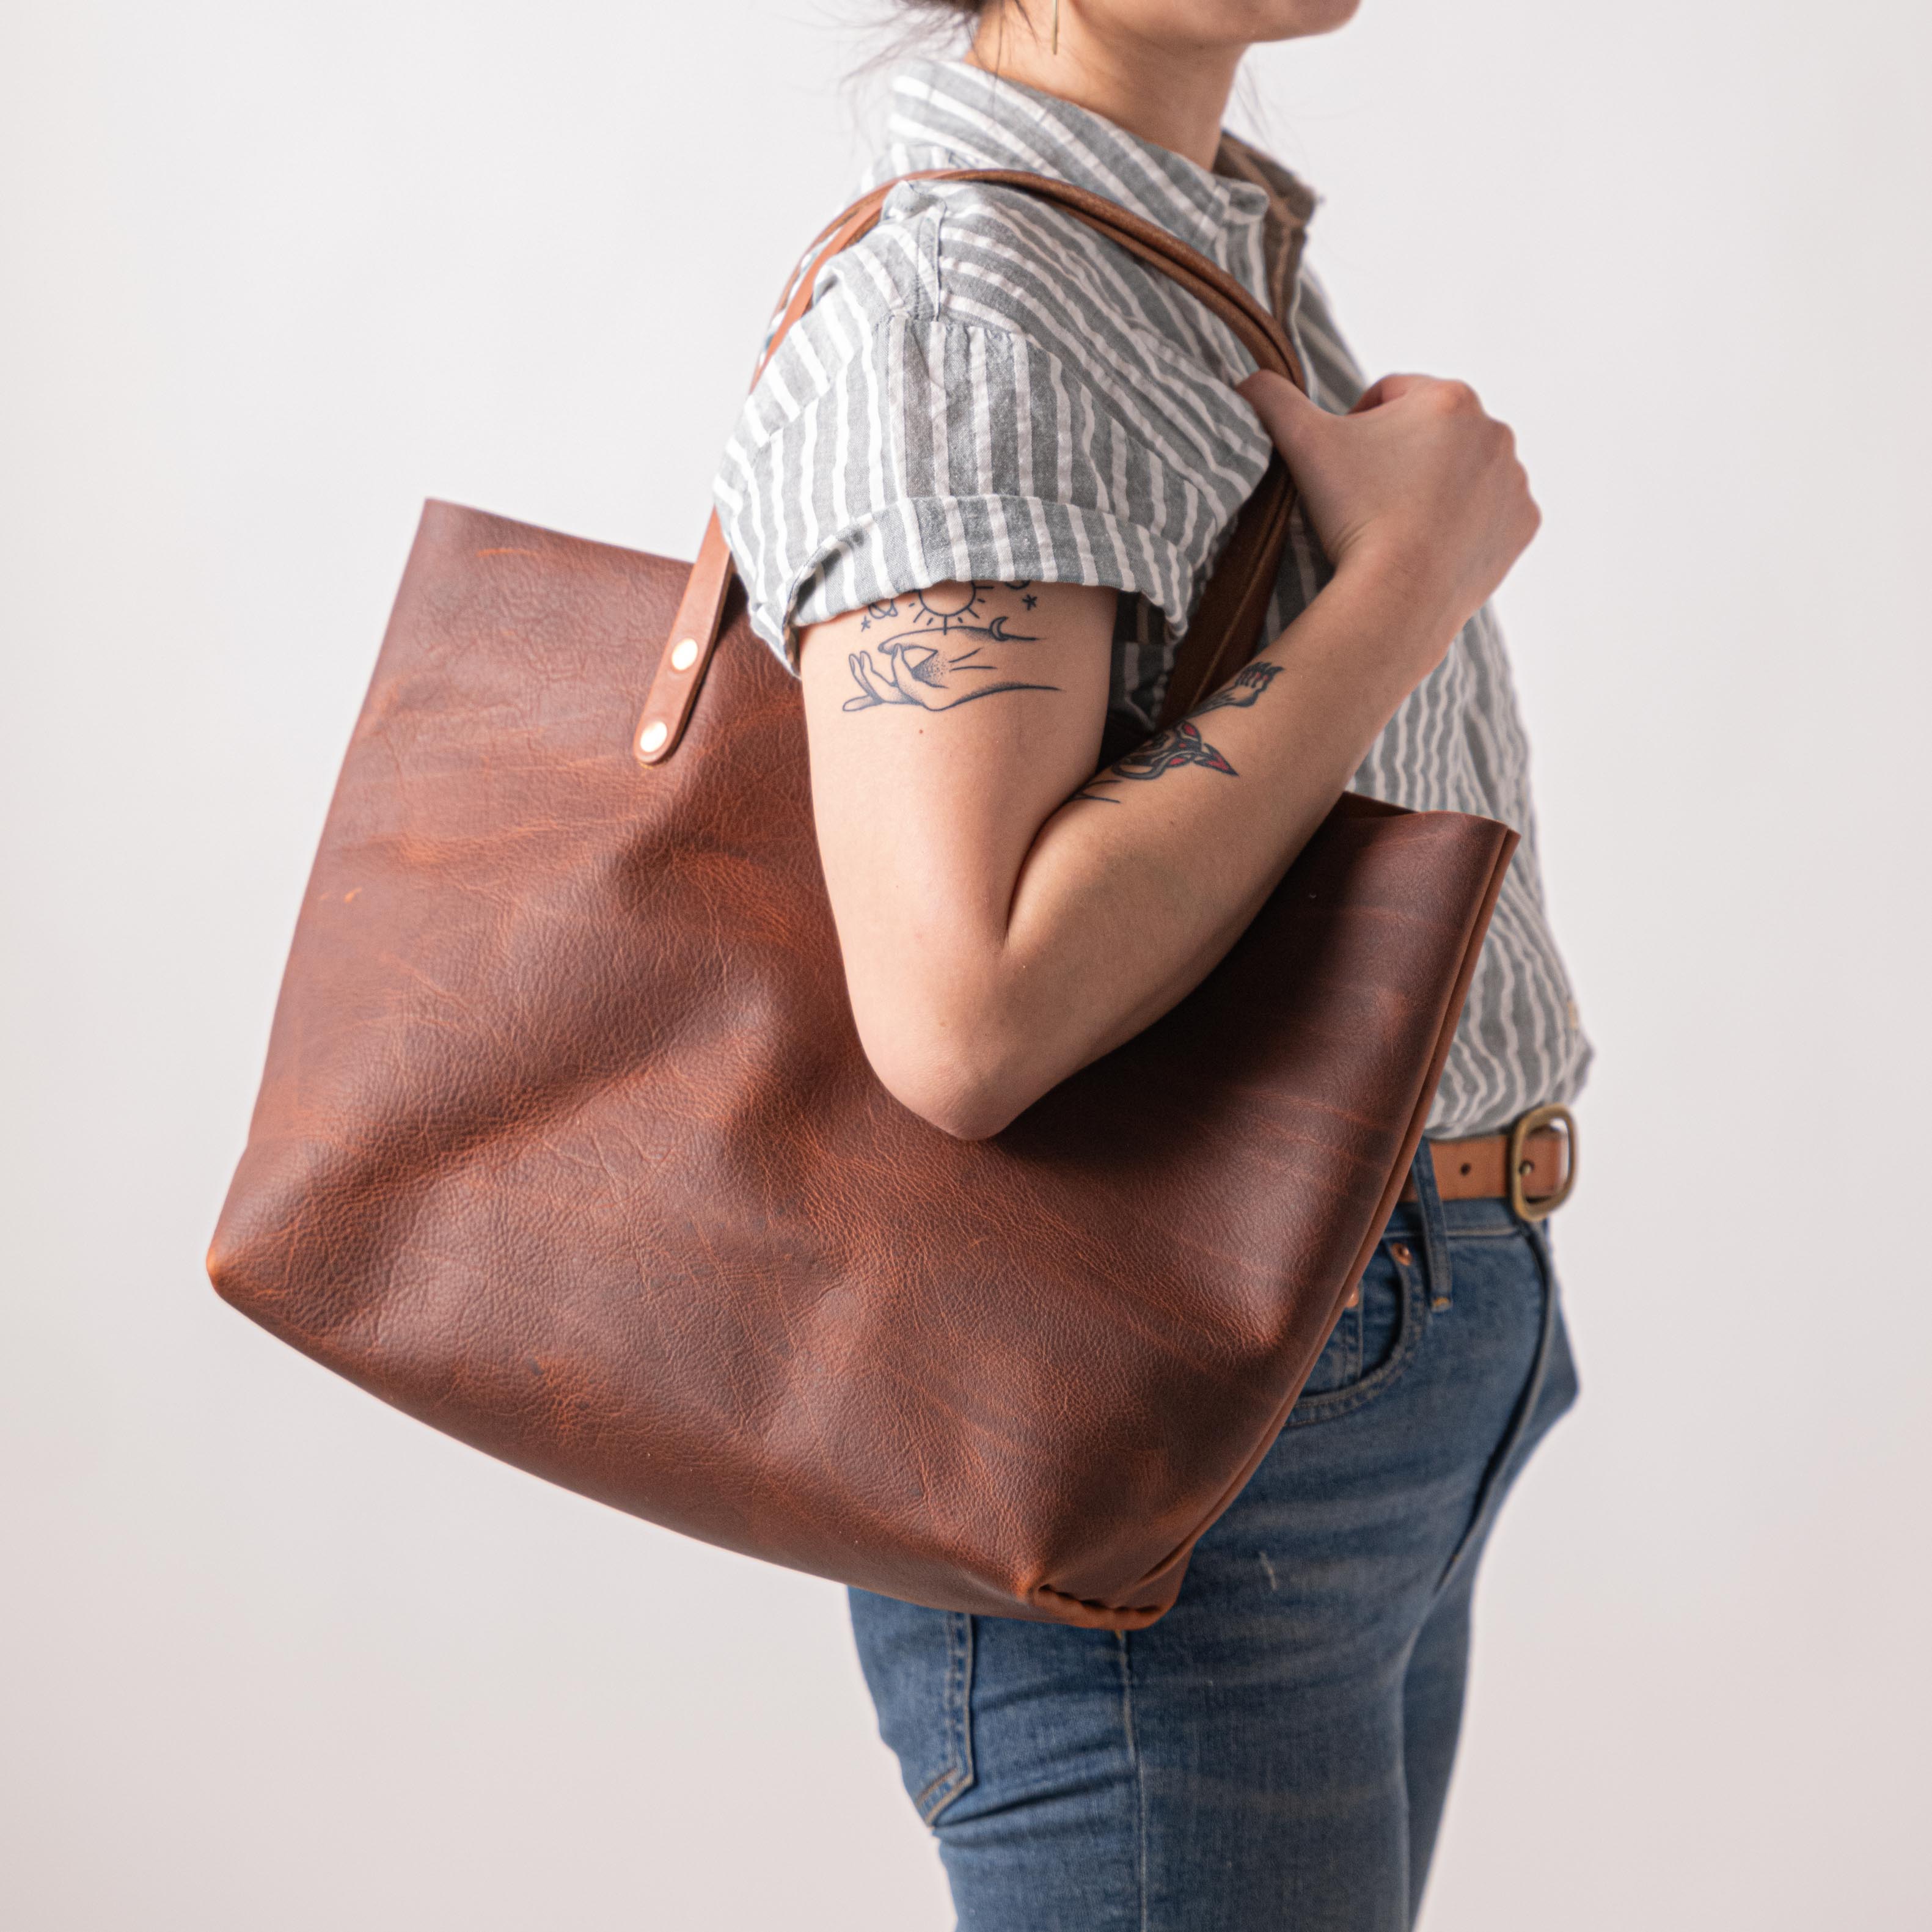 The Mini Leather Bucket Shoulder Bag - Handmade Women's Leather Bag